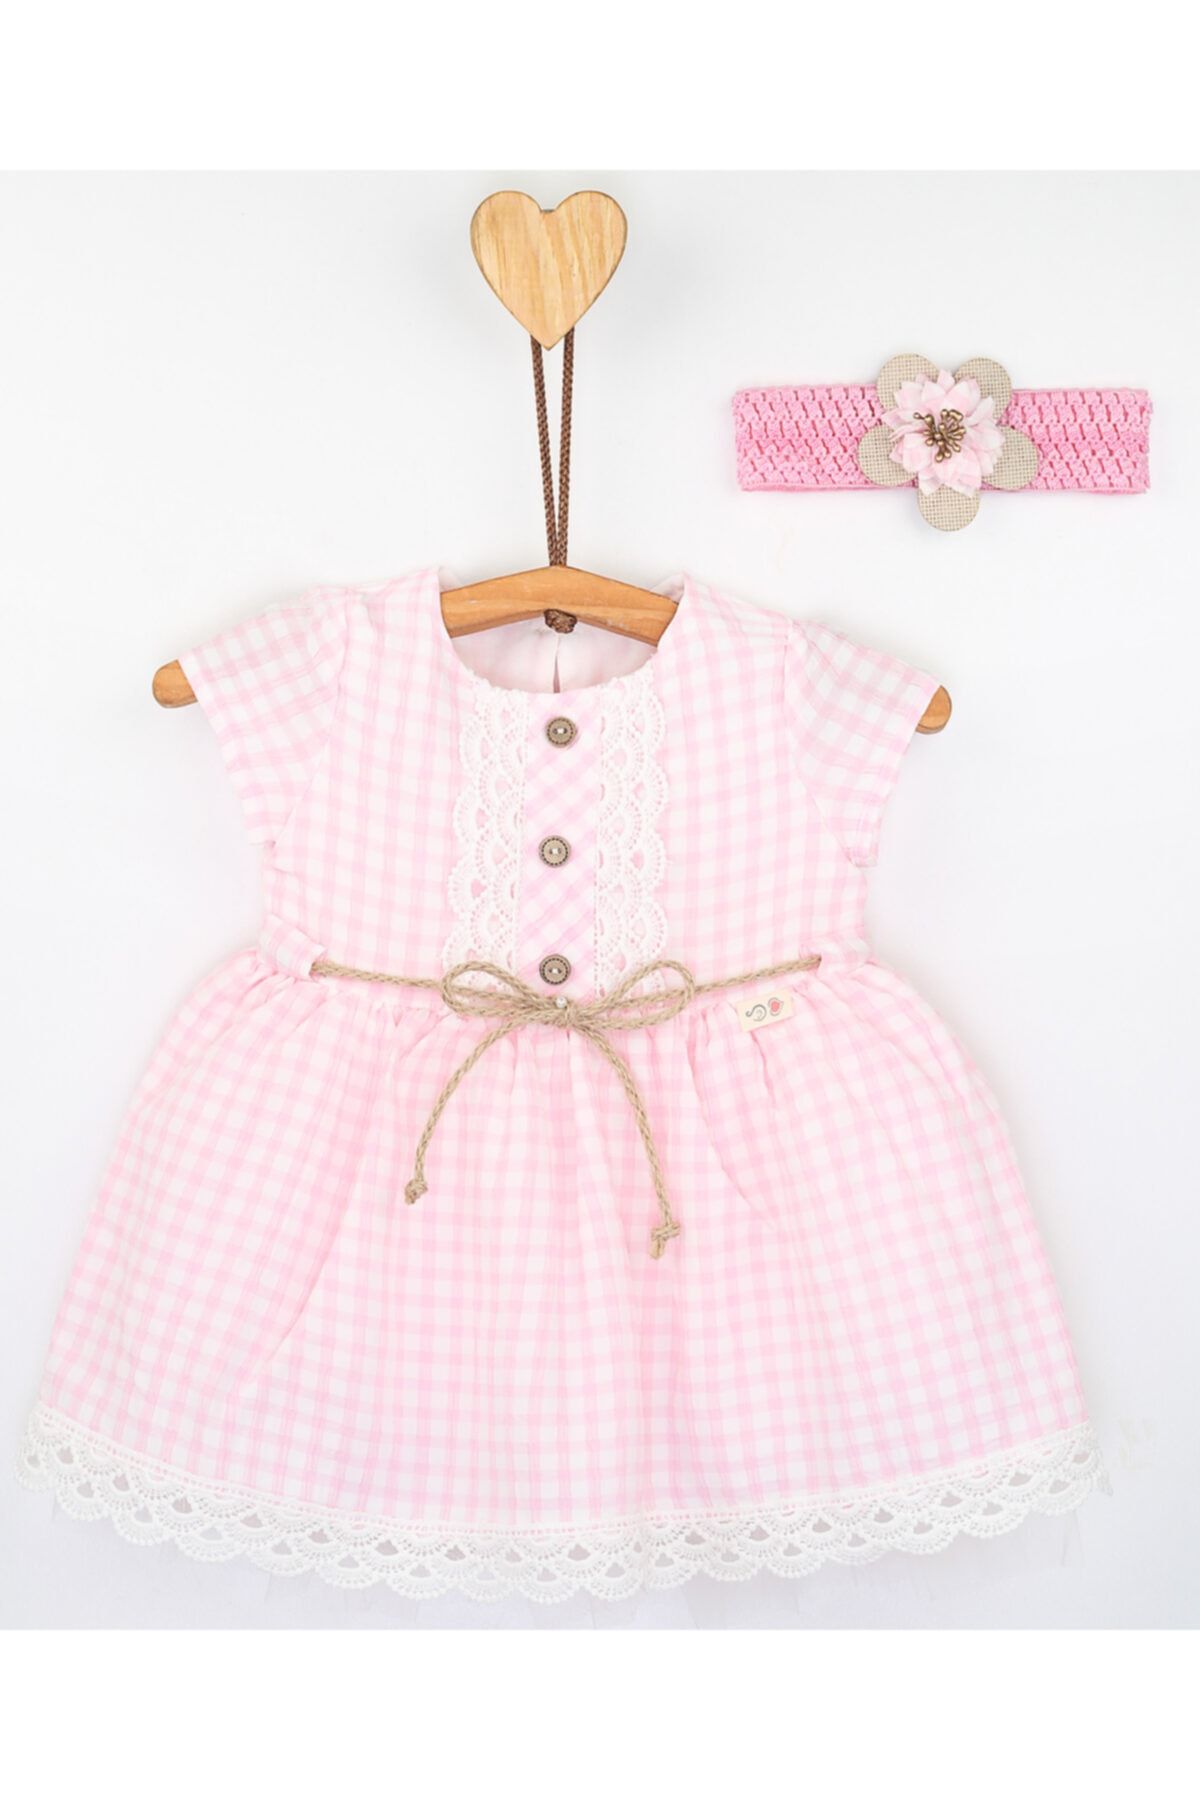 Lilax Kız Bebek Elbise Kareli Bandanalı Pembe